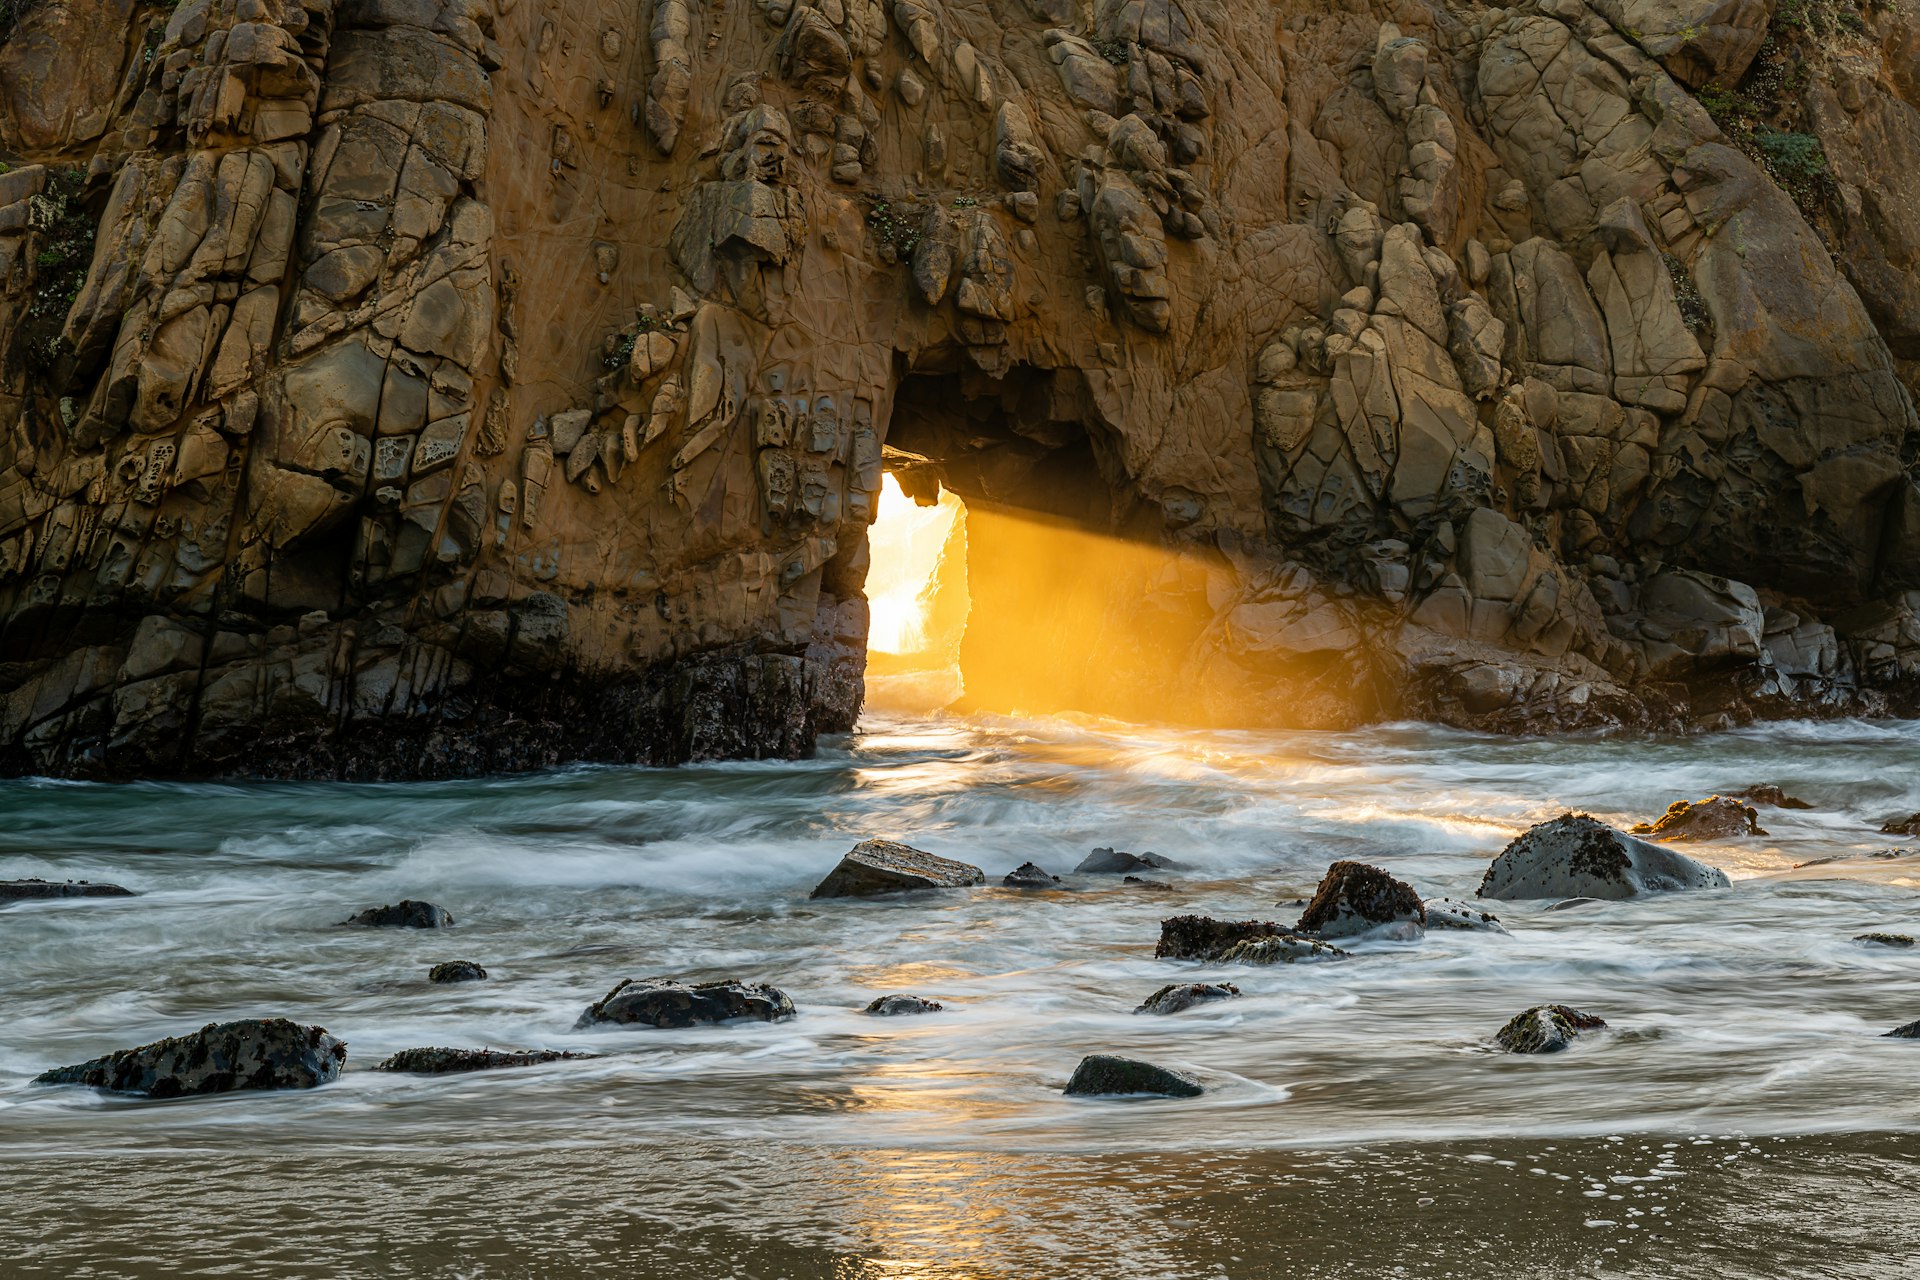 Watching the sun set through Keyhole Arch at Pfeiffer Beach in Big Sur, California.